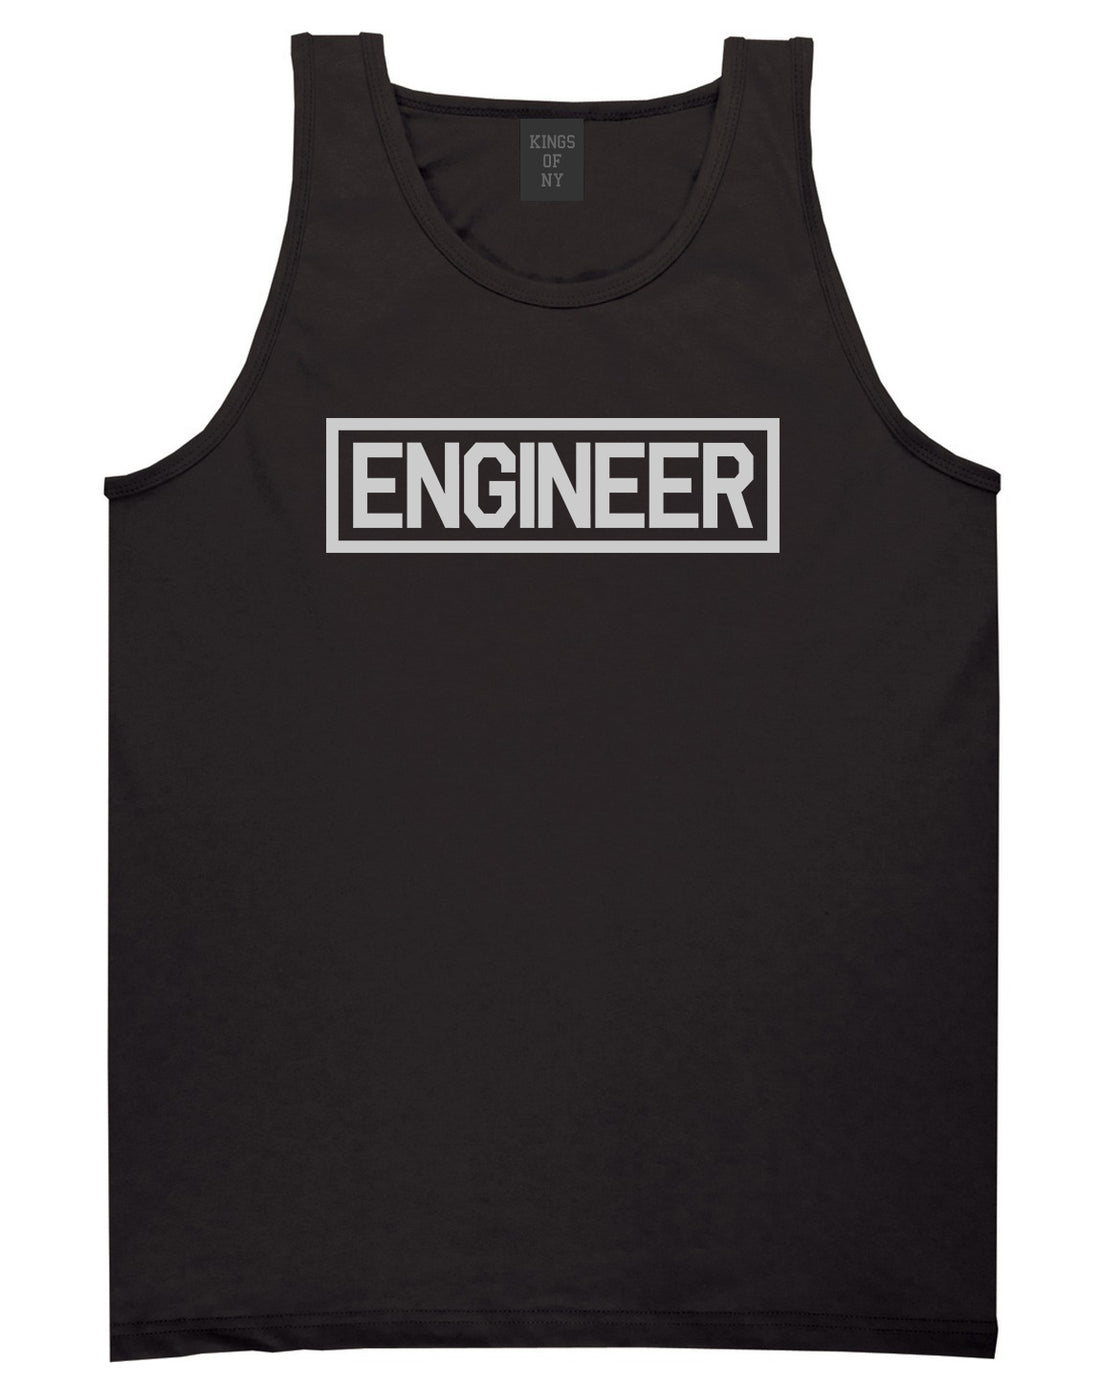 Engineer_Occupation_Job Mens Black Tank Top Shirt by Kings Of NY